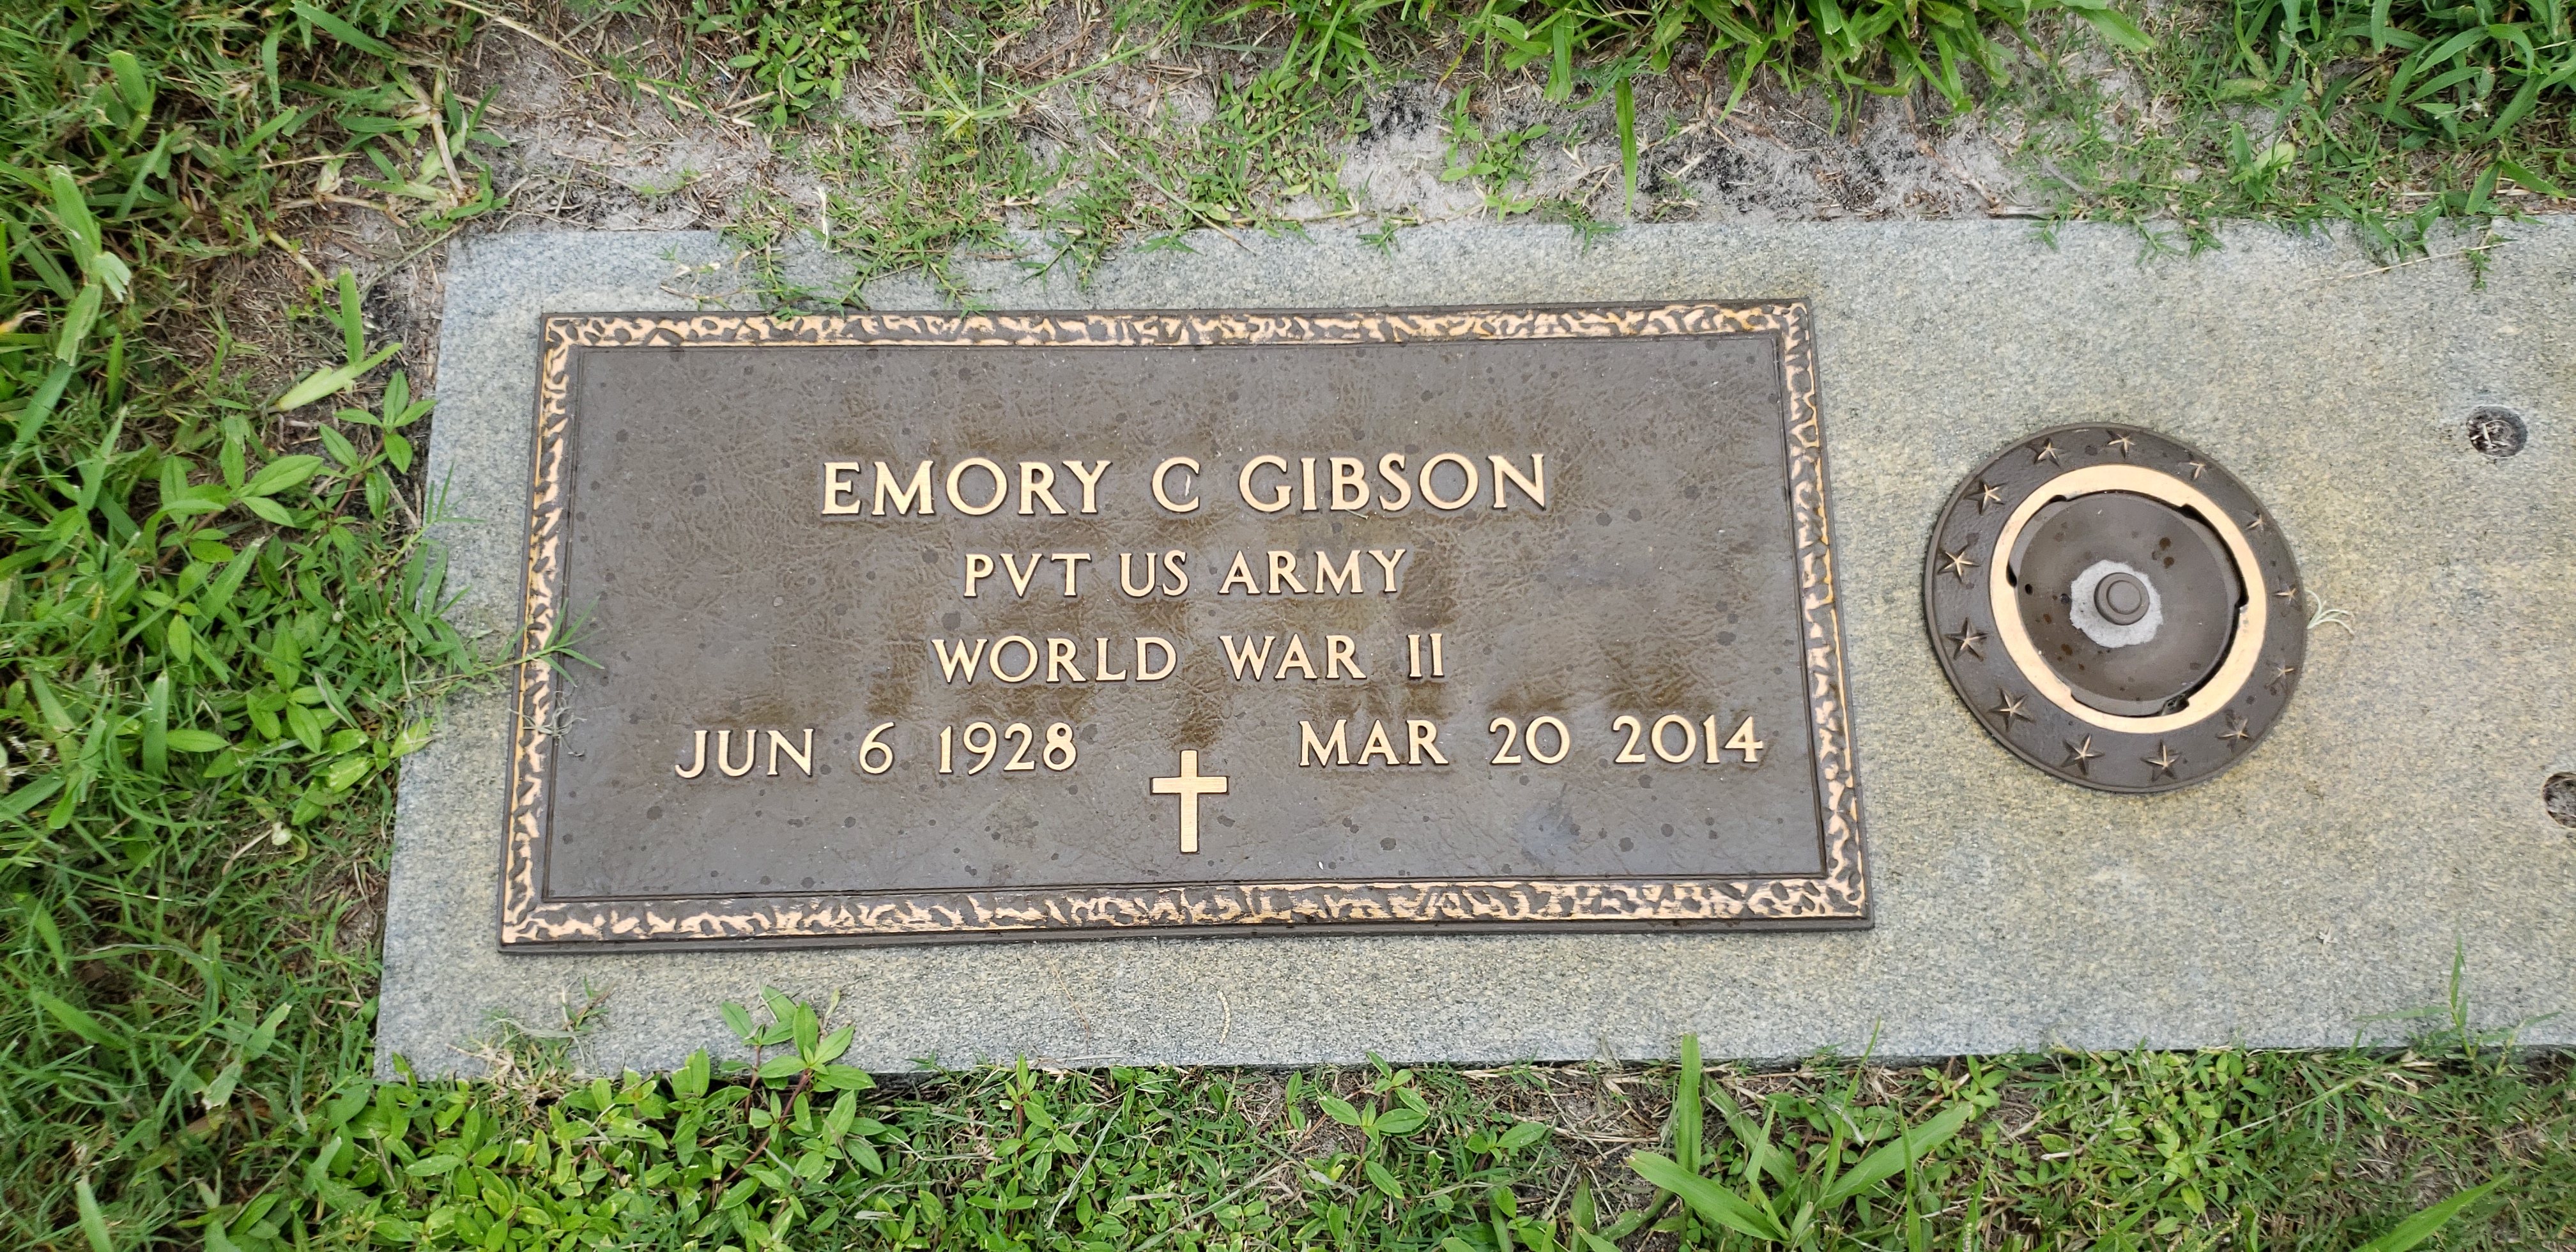 Emory C Gibson